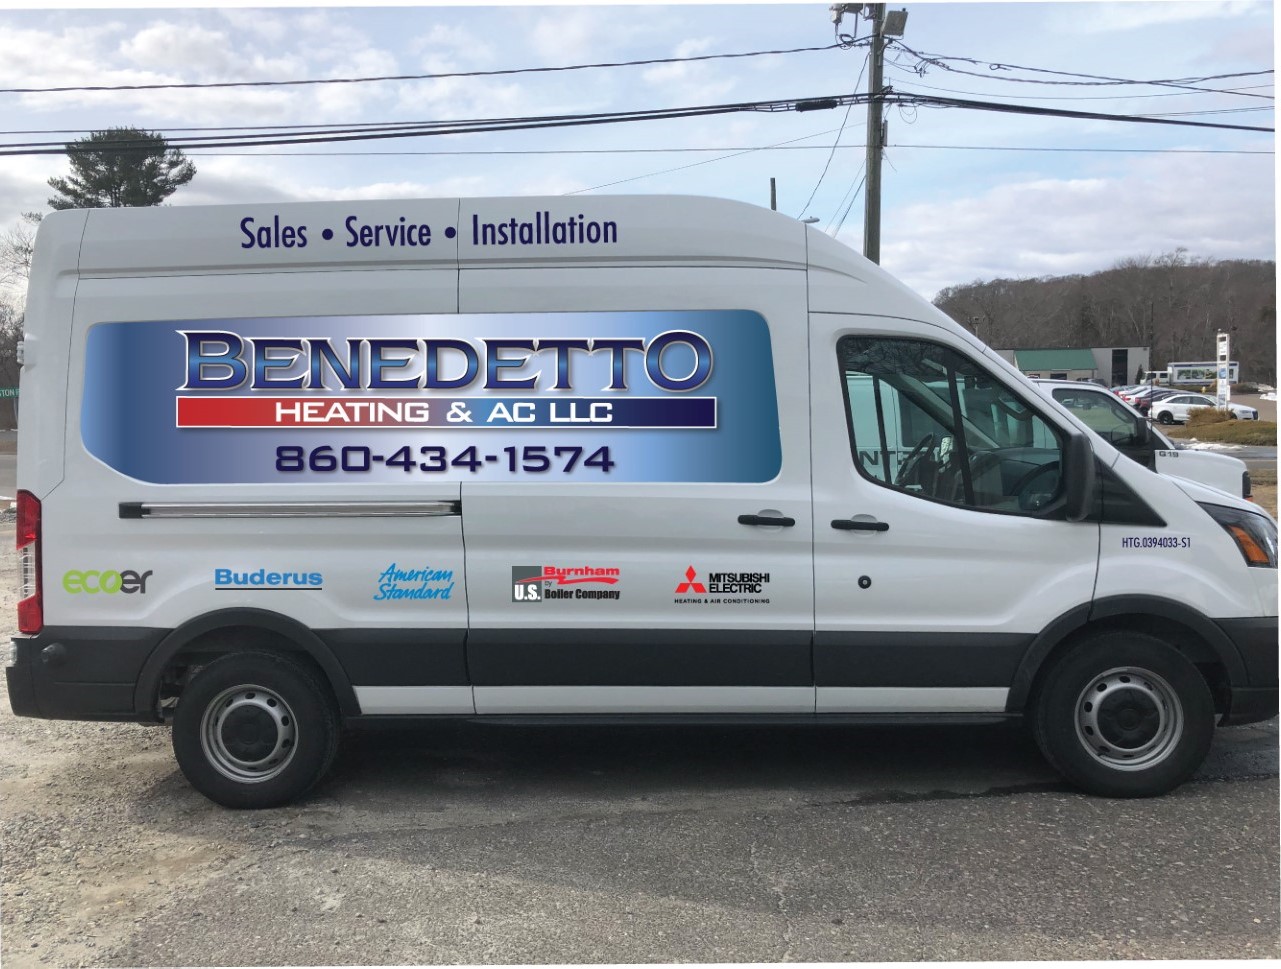 Benedetto Heating & AC LLC